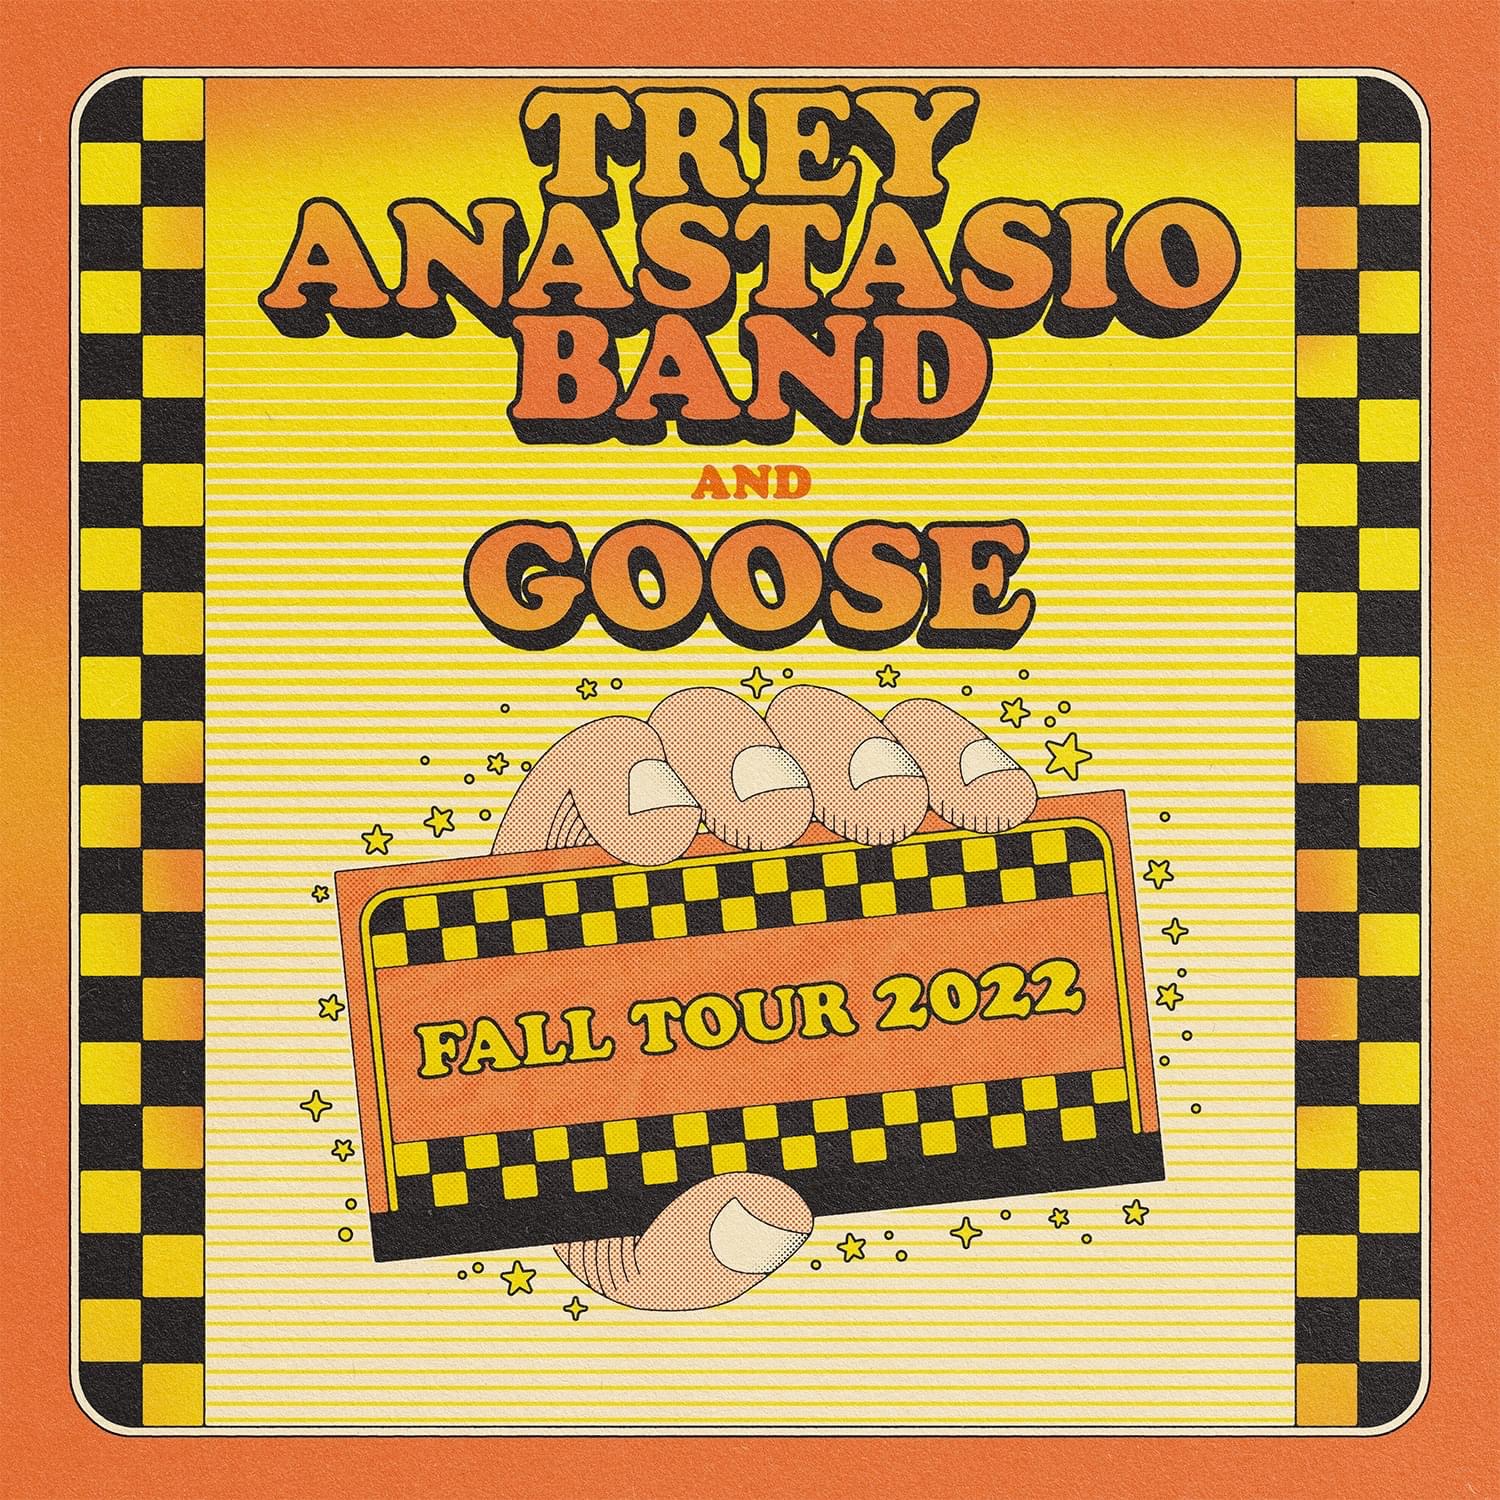 Trey Anastasio Band and Goose Fall Tour 2022